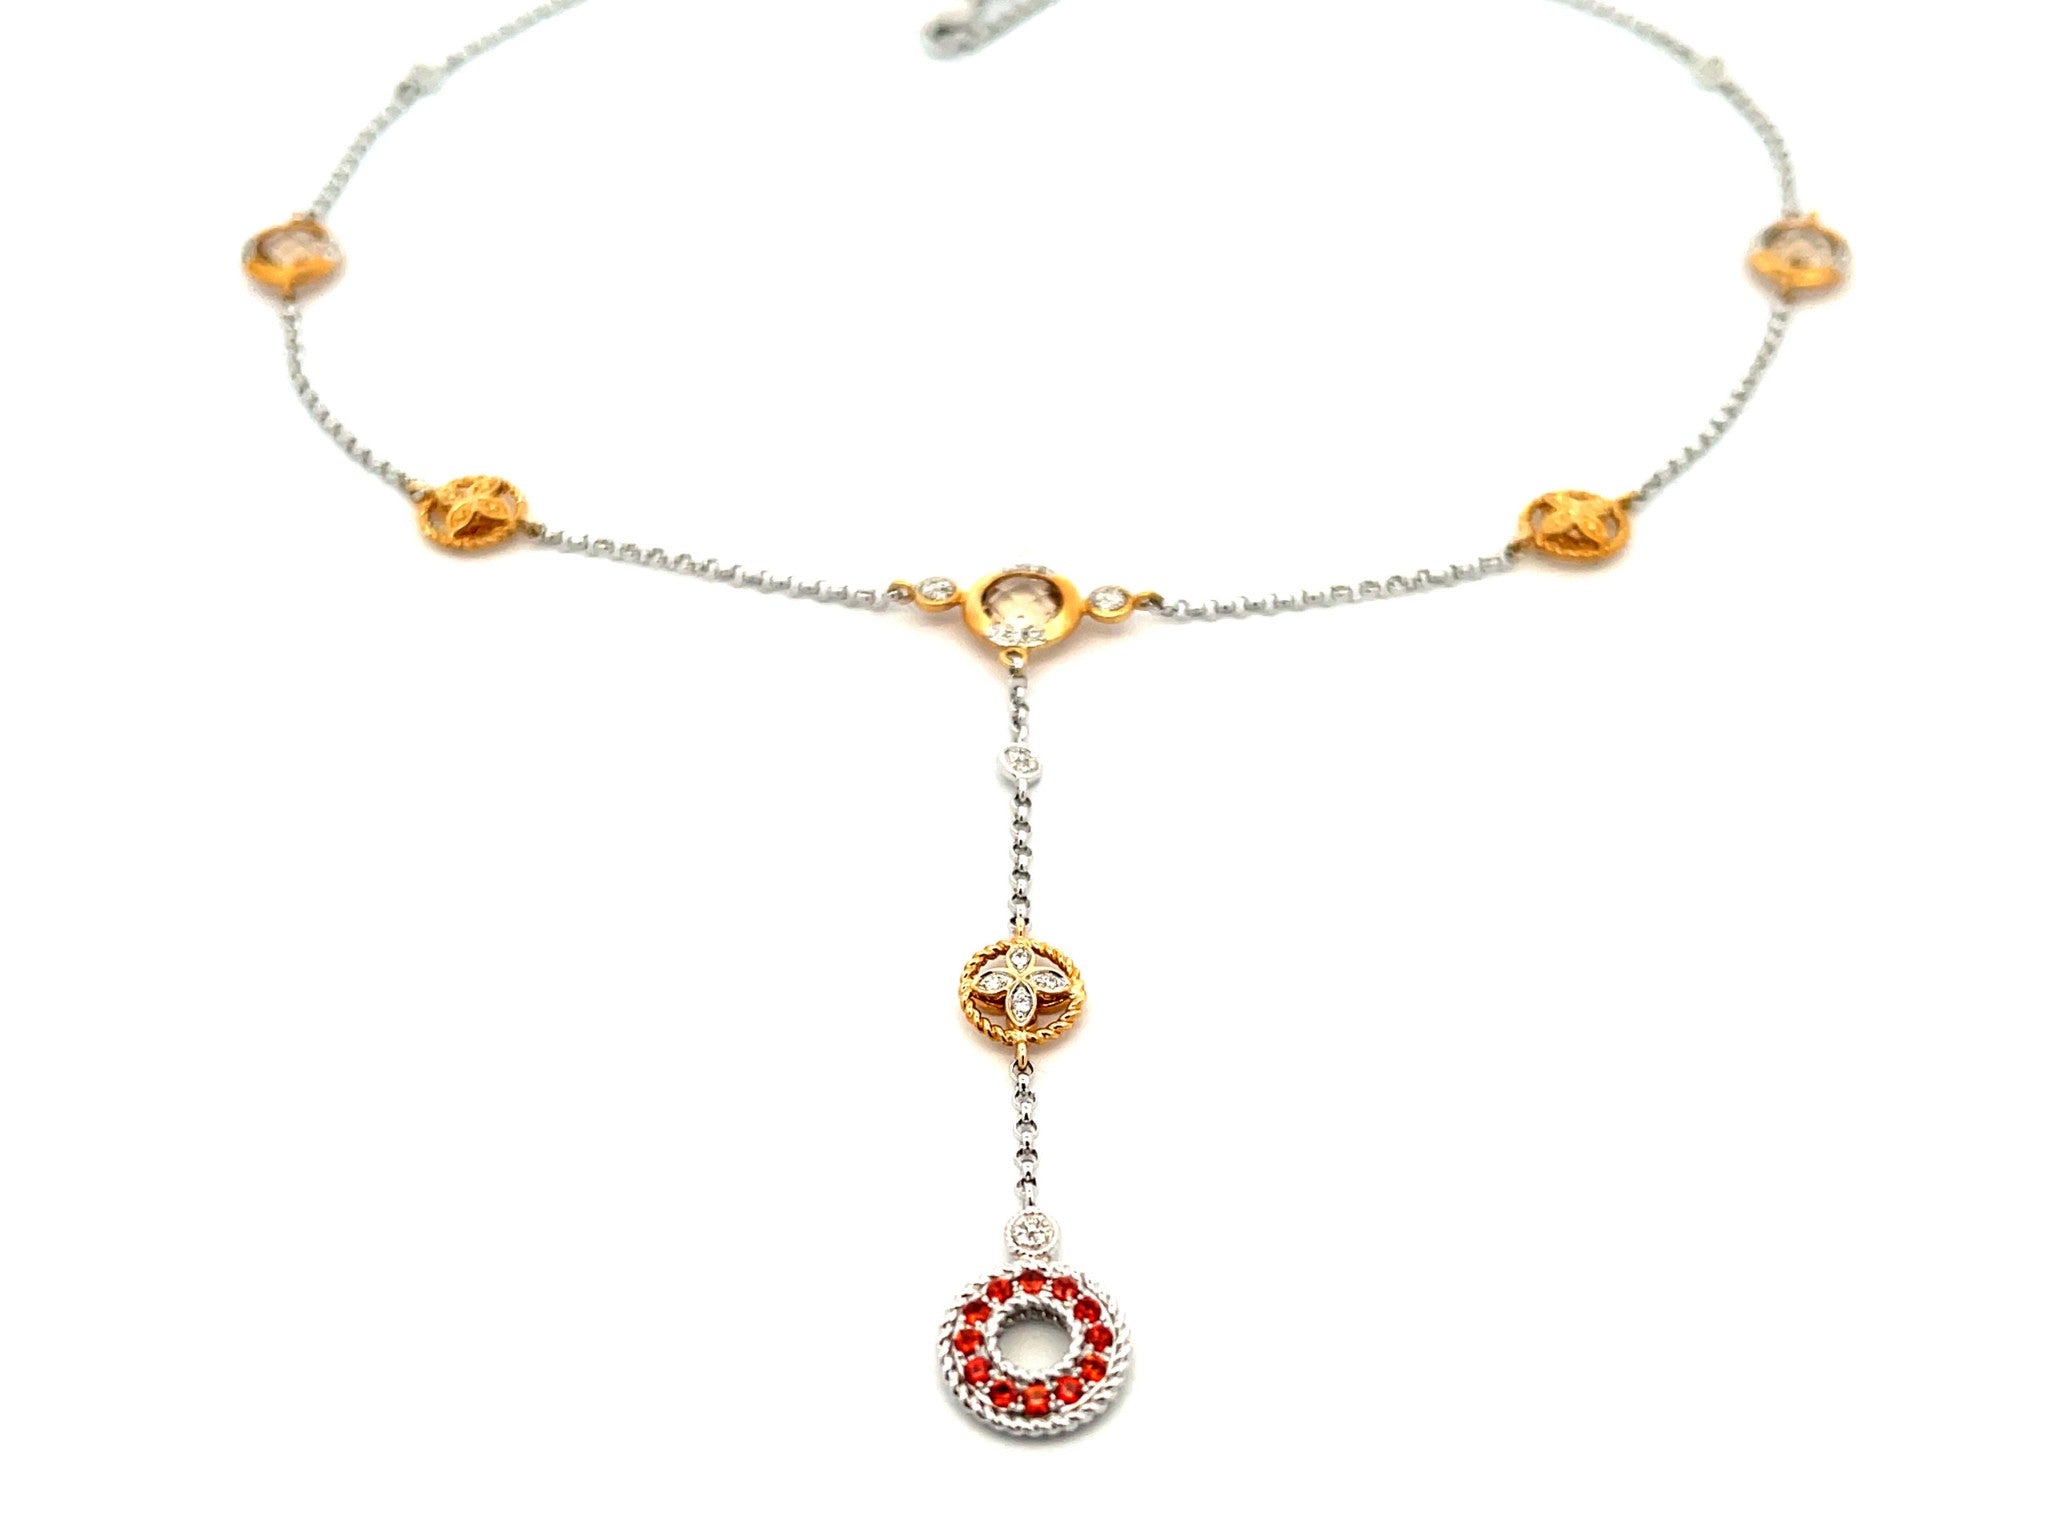 Mandarin Garnet Smokey Topaz and Diamond Necklace in 14k White and Yellow Gold